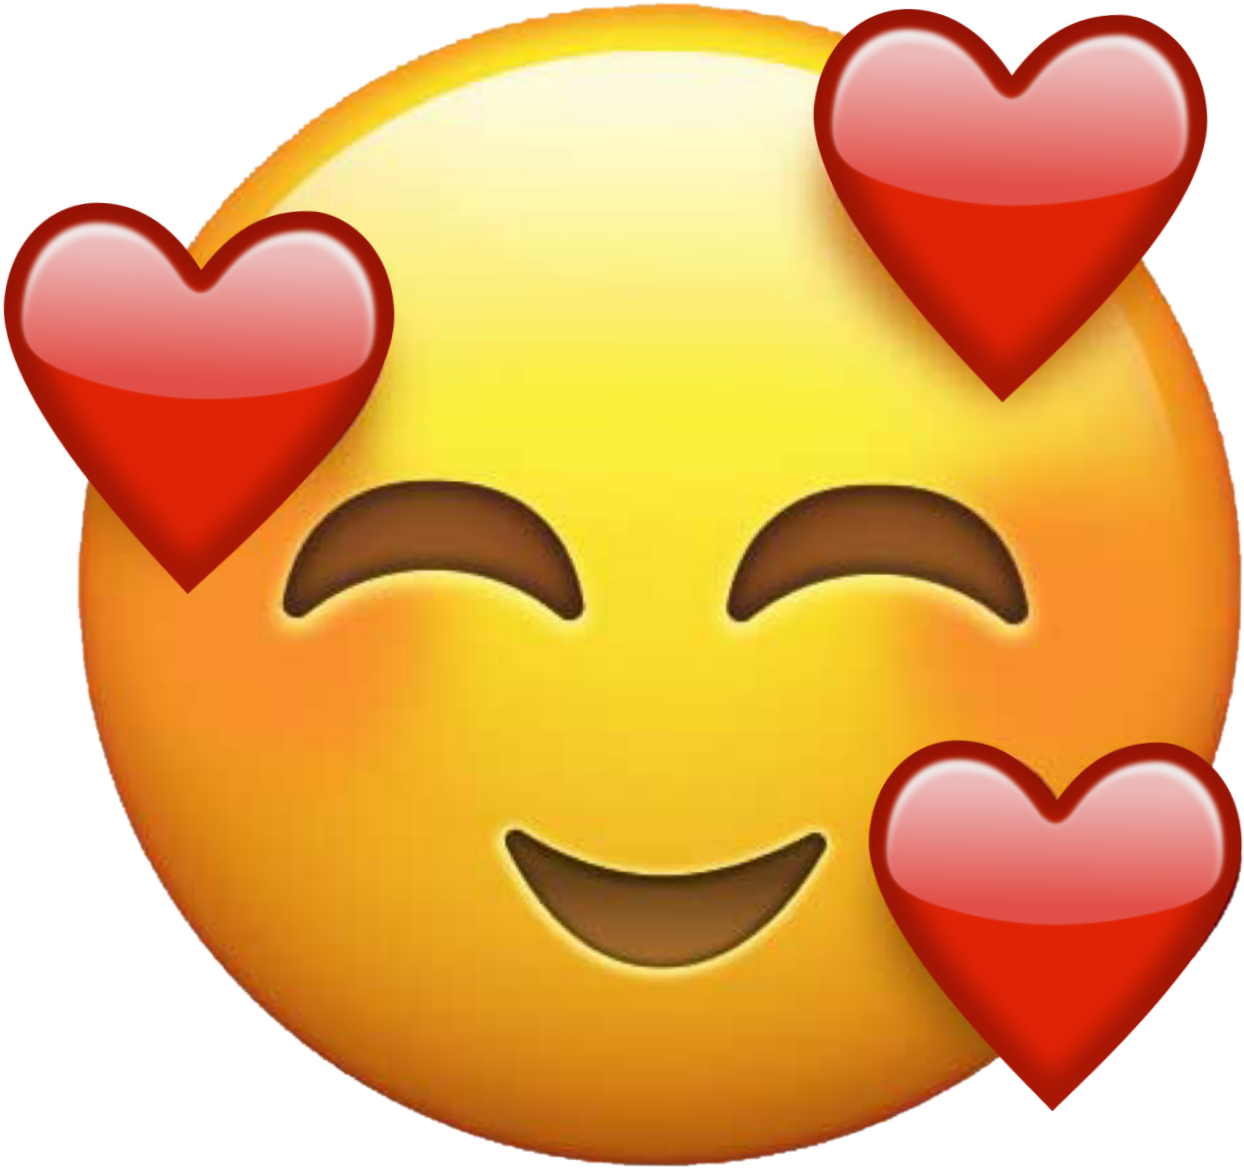 Twitter Emoji Heart Free PNG Image